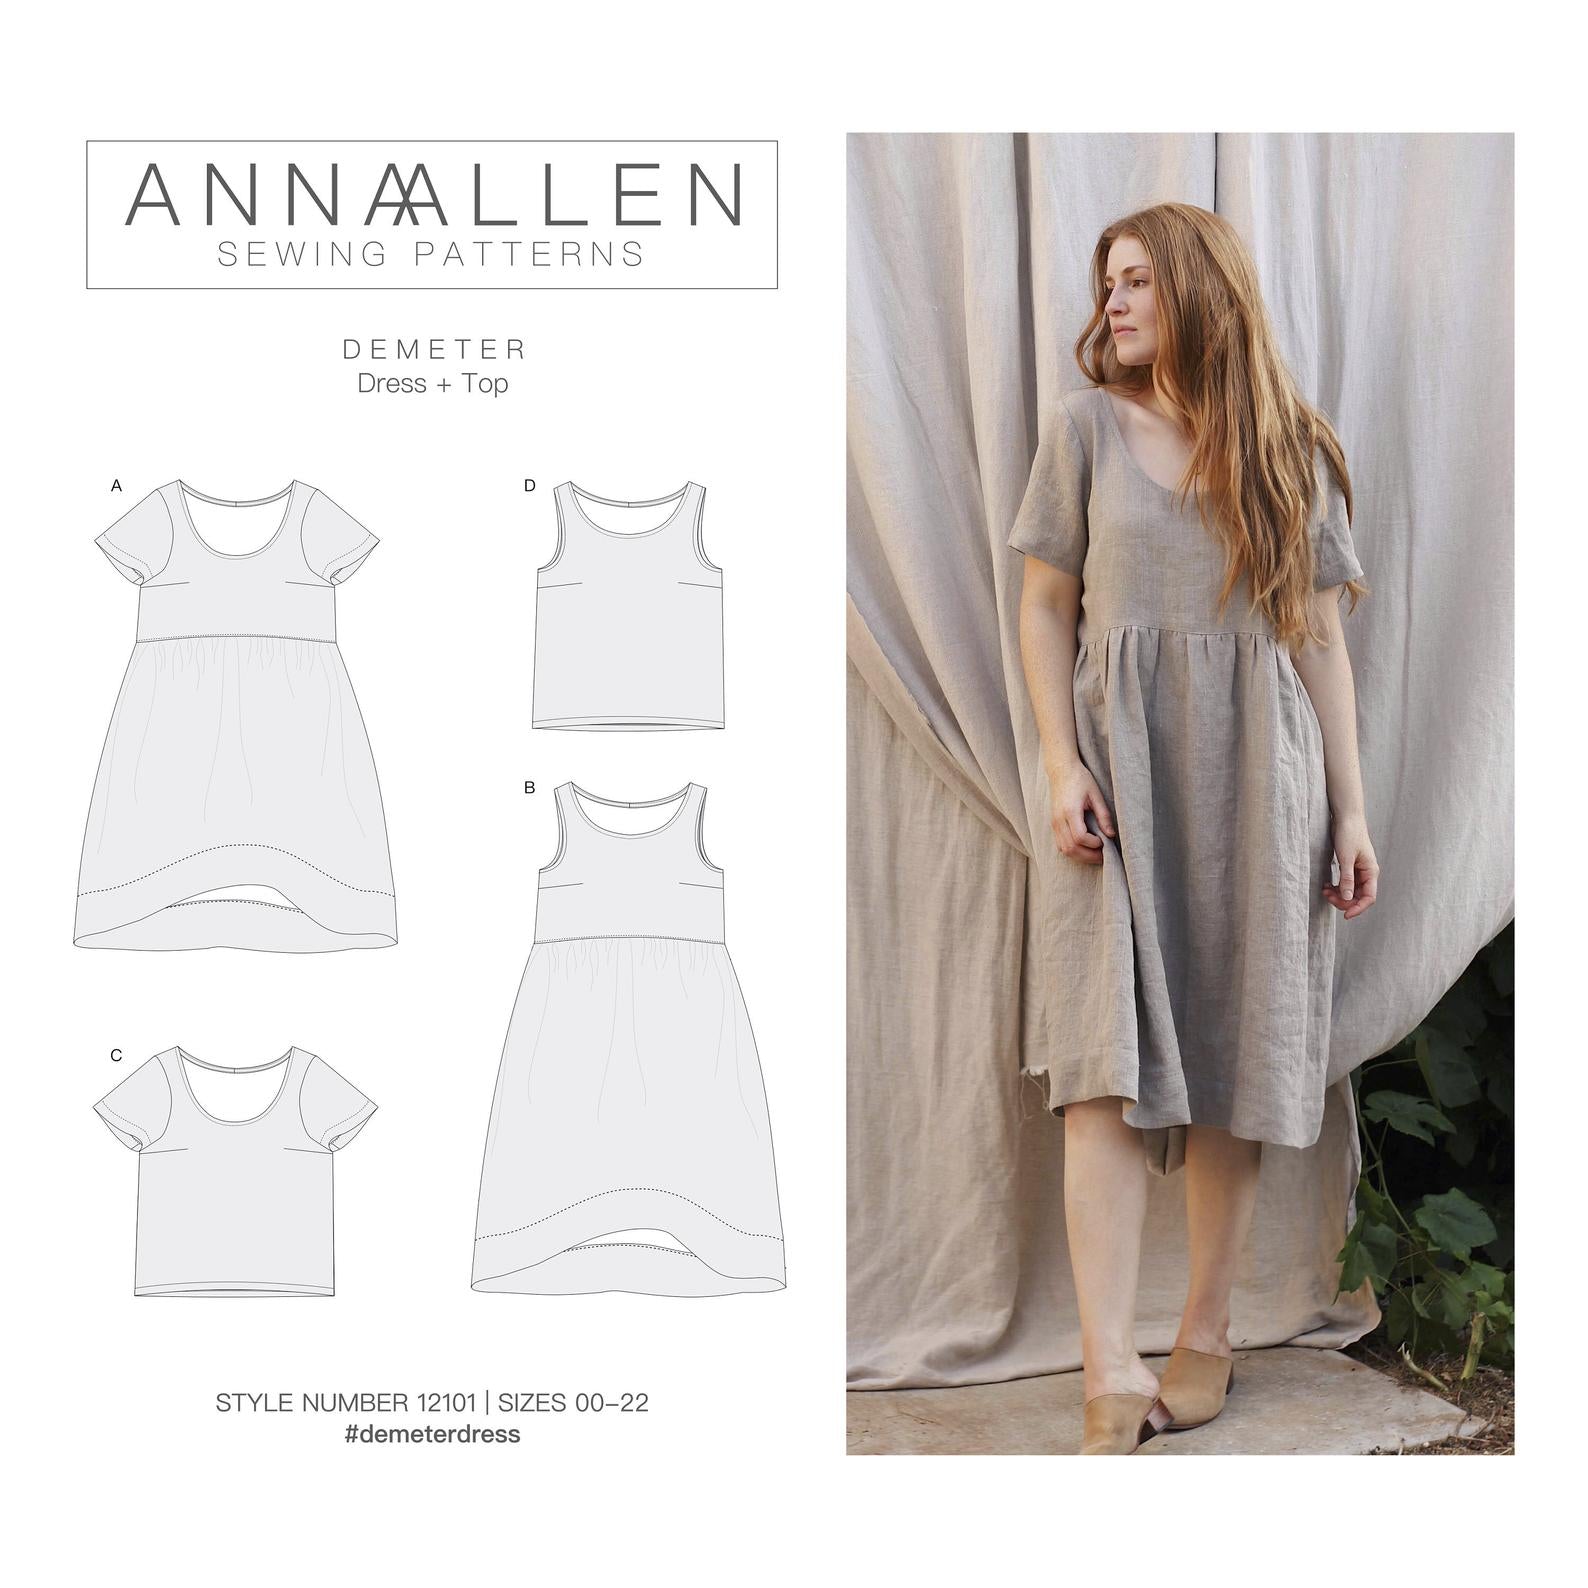 Demeter Dress + Top - PDF Sewing Pattern Sizes 00-22 – Anna Allen